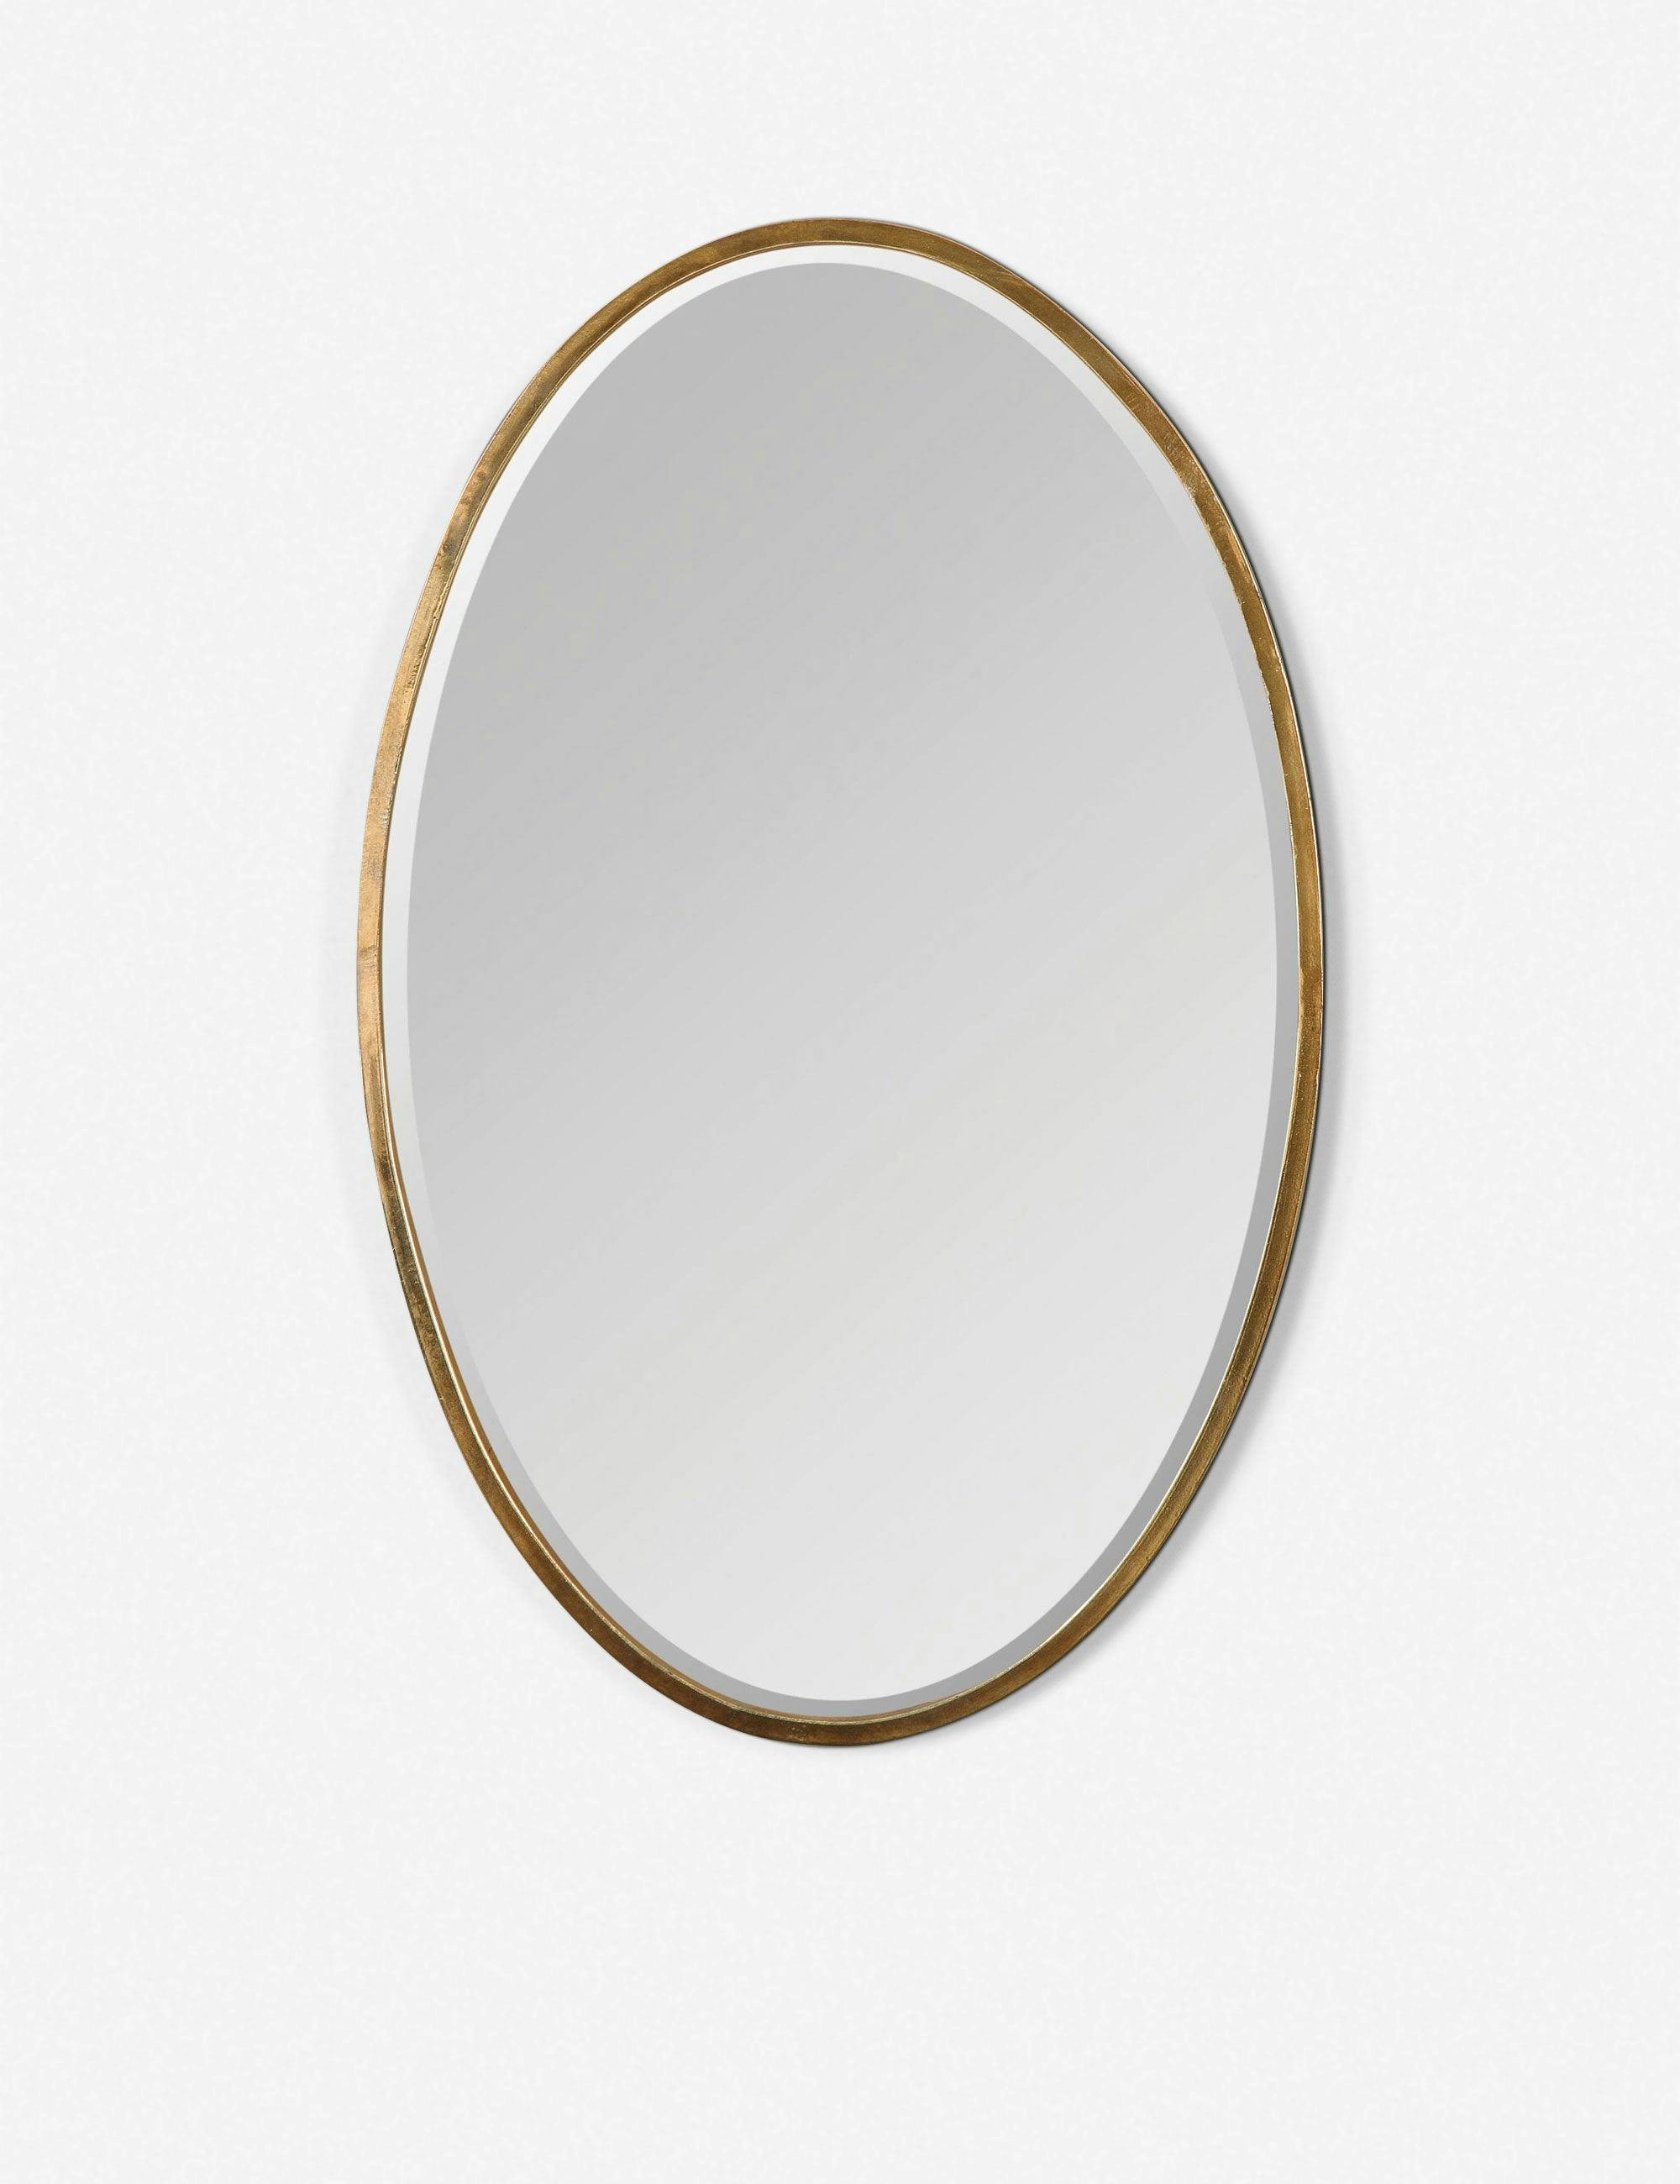 Merci Contemporary Gold Oval Wall Mirror - 18" x 28"